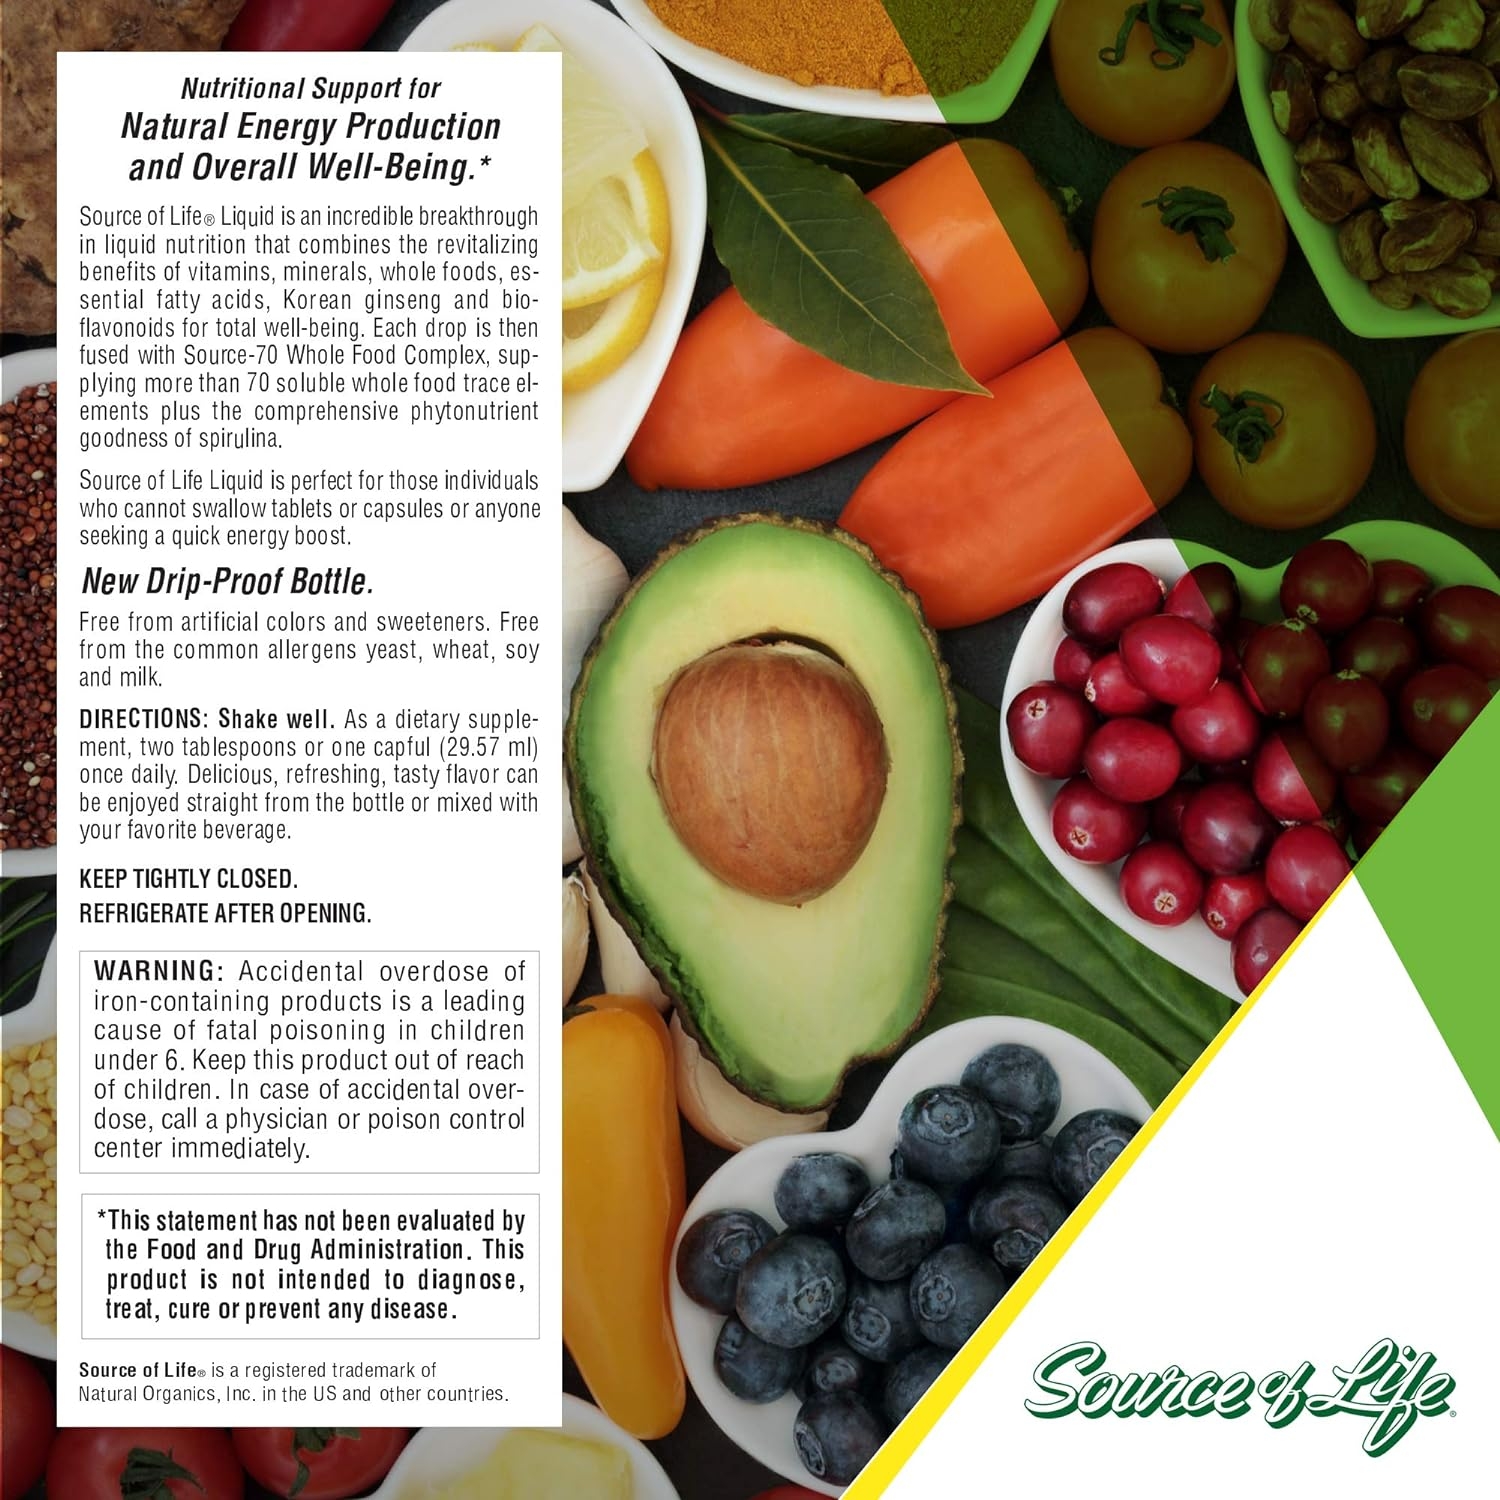 NaturesPlus Source of Life Liquid - 30 fl oz - Tropical Fruit Flavor - Wholefood Supplement, Energy Booster, Antioxidant - Vegetarian, Gluten-Free - 30 Servings